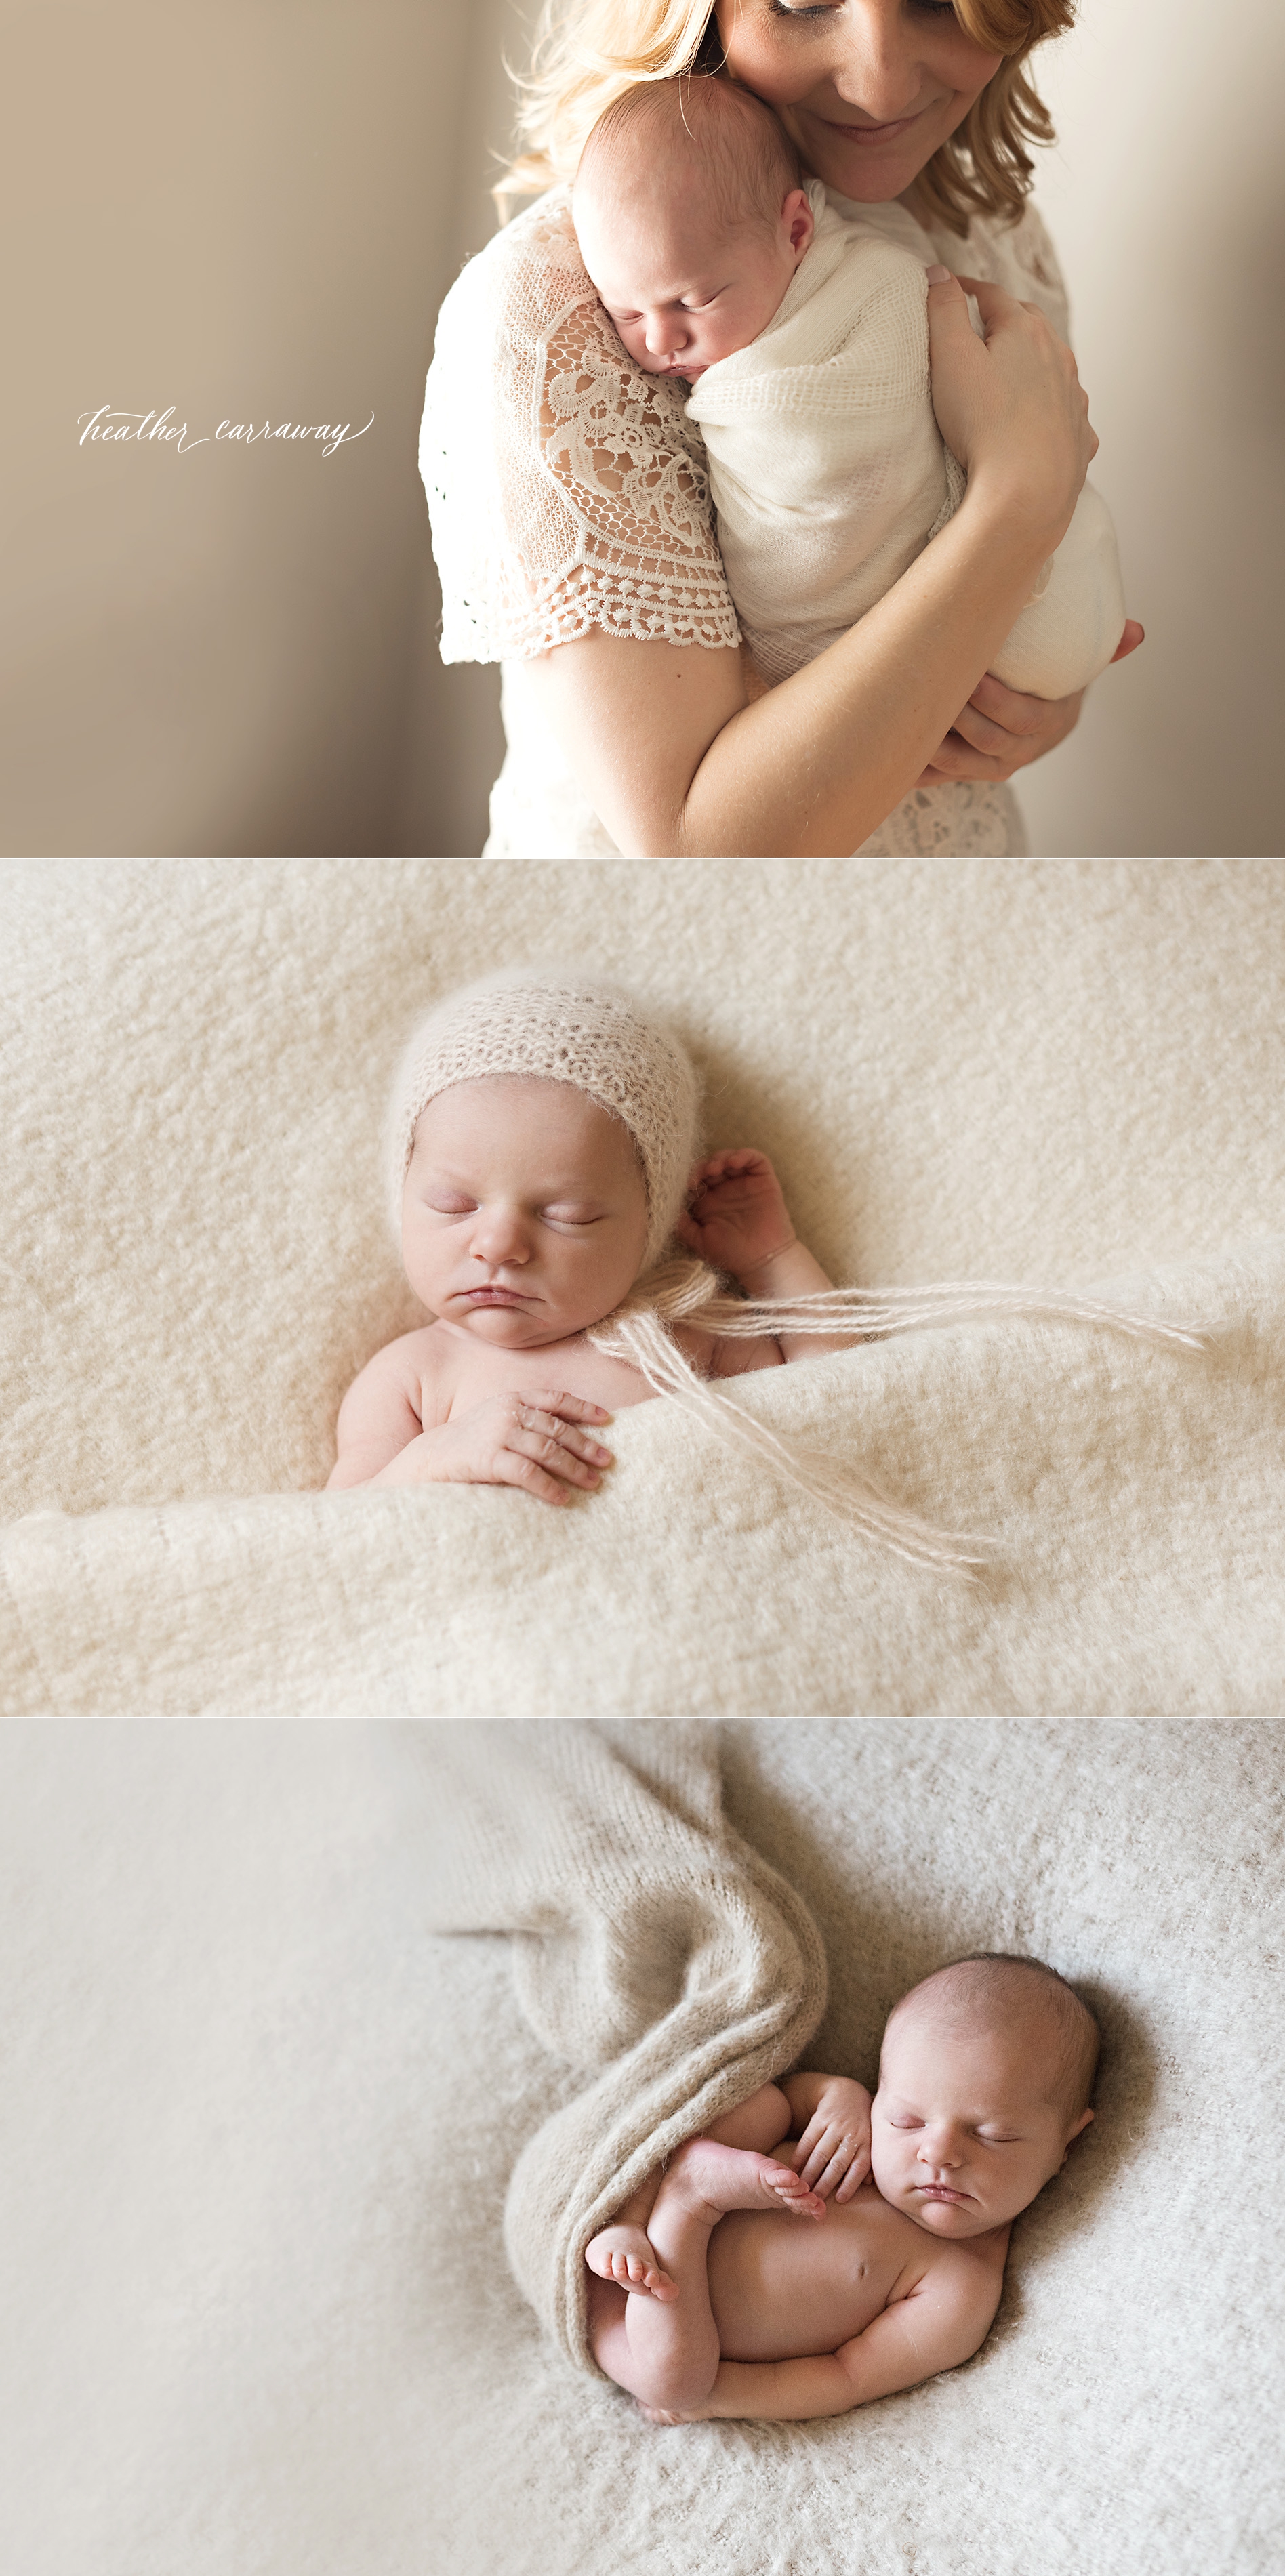 atlanta natural newborn photographer, simple newborn photos